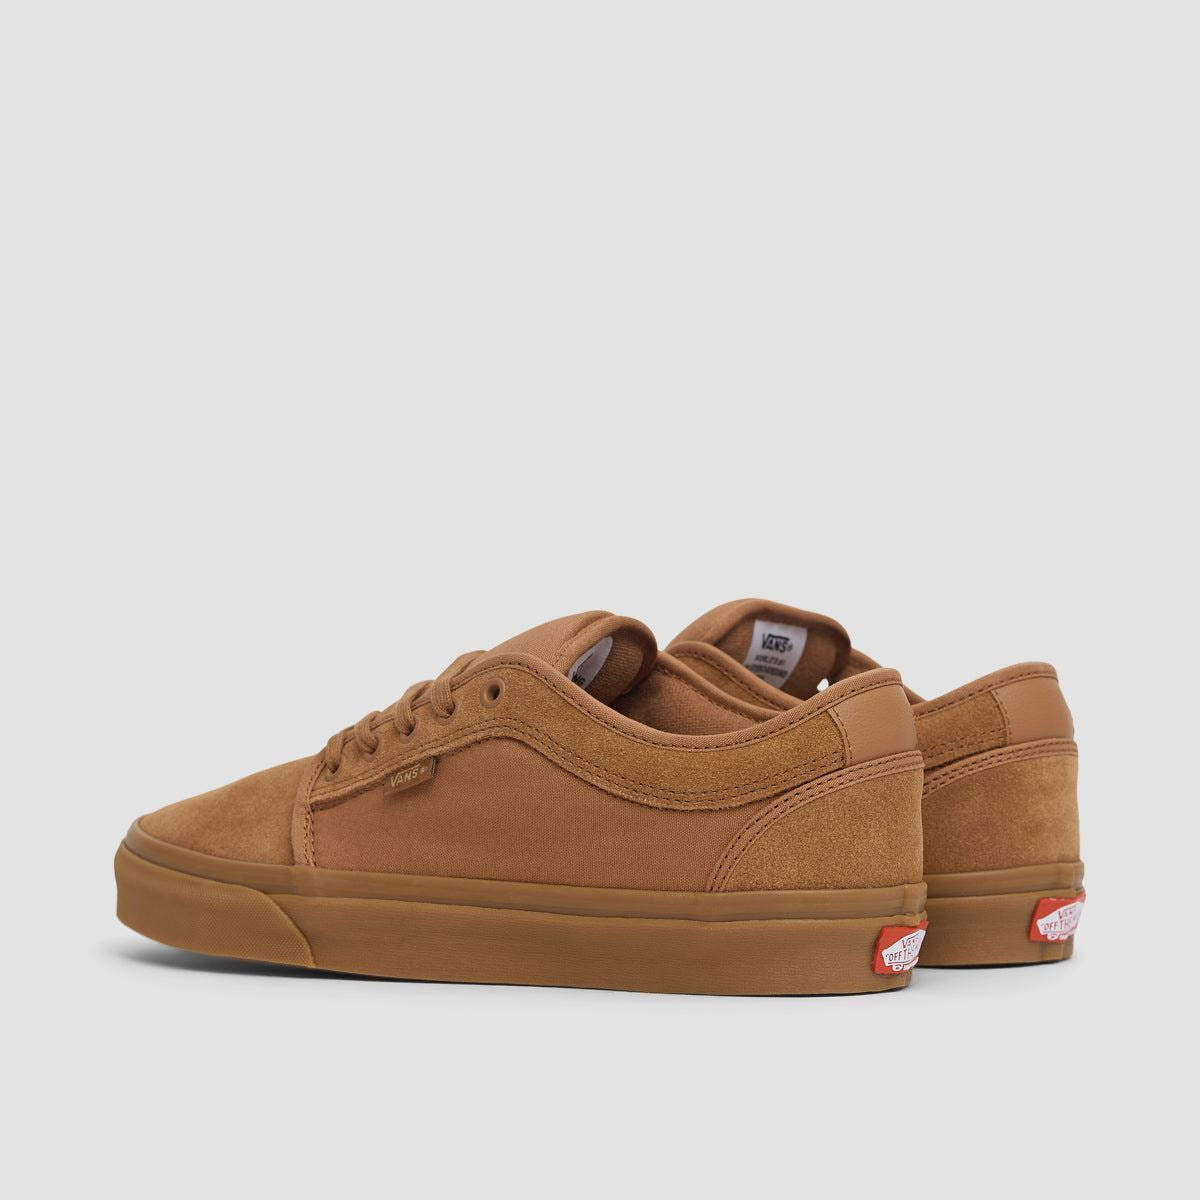 Vans Skate Chukka Low Shoes - Light Brown/Gum